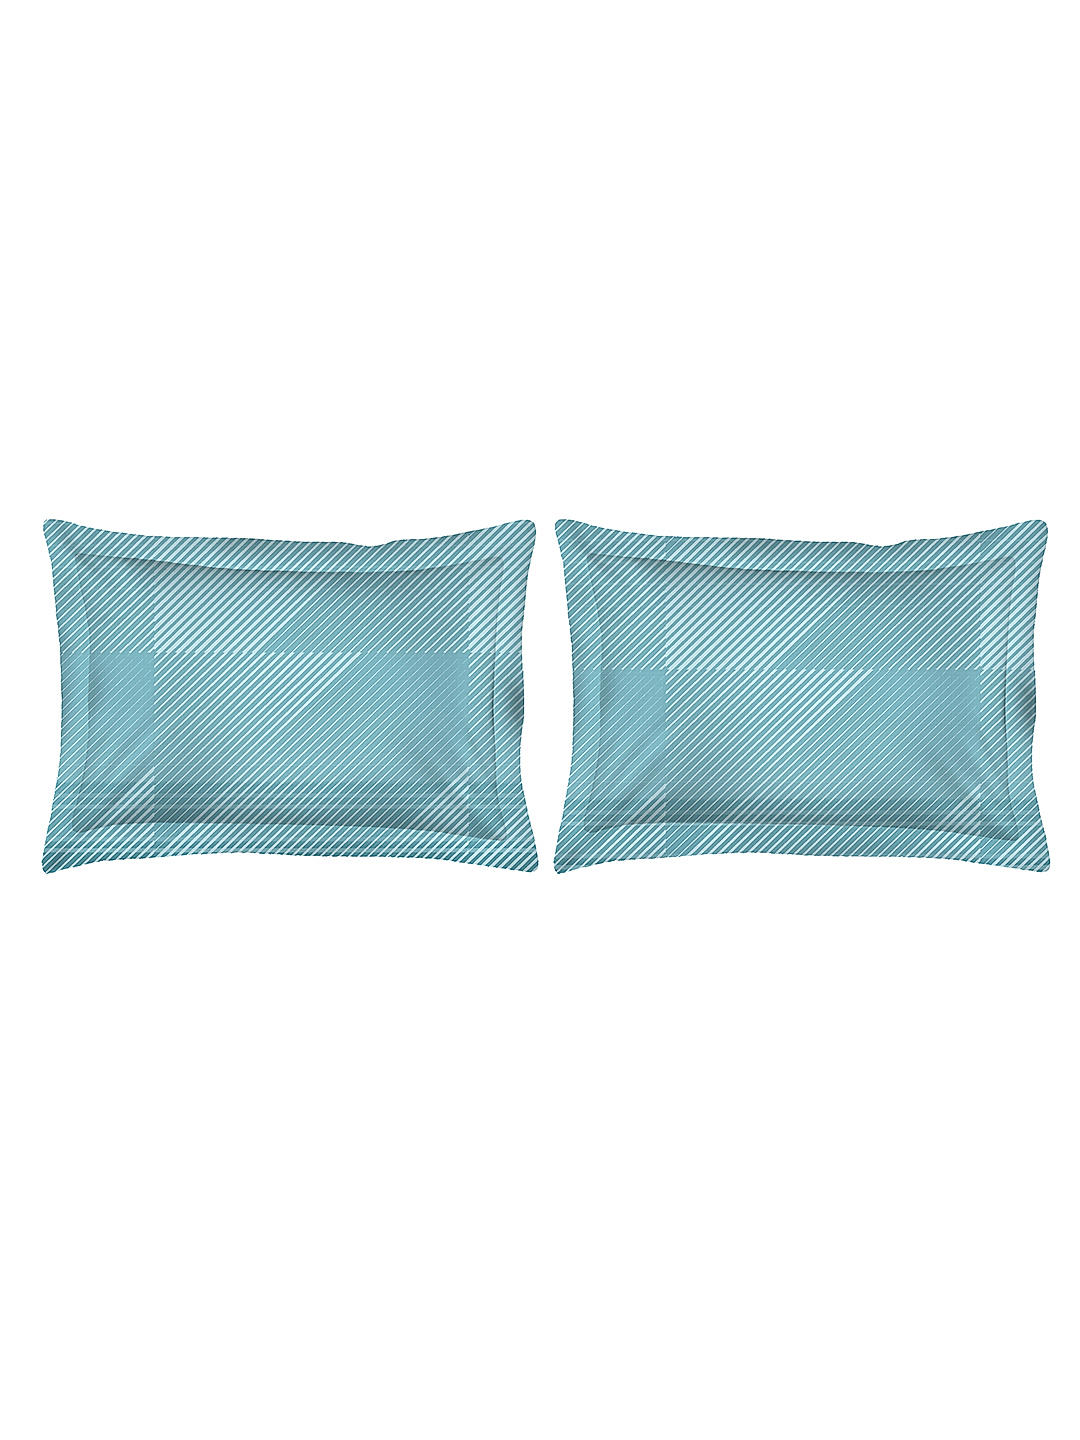 Mystic Hues 270 TC 100% cotton Super Fine Blue Colored Geometric Print King Bed Sheet Set